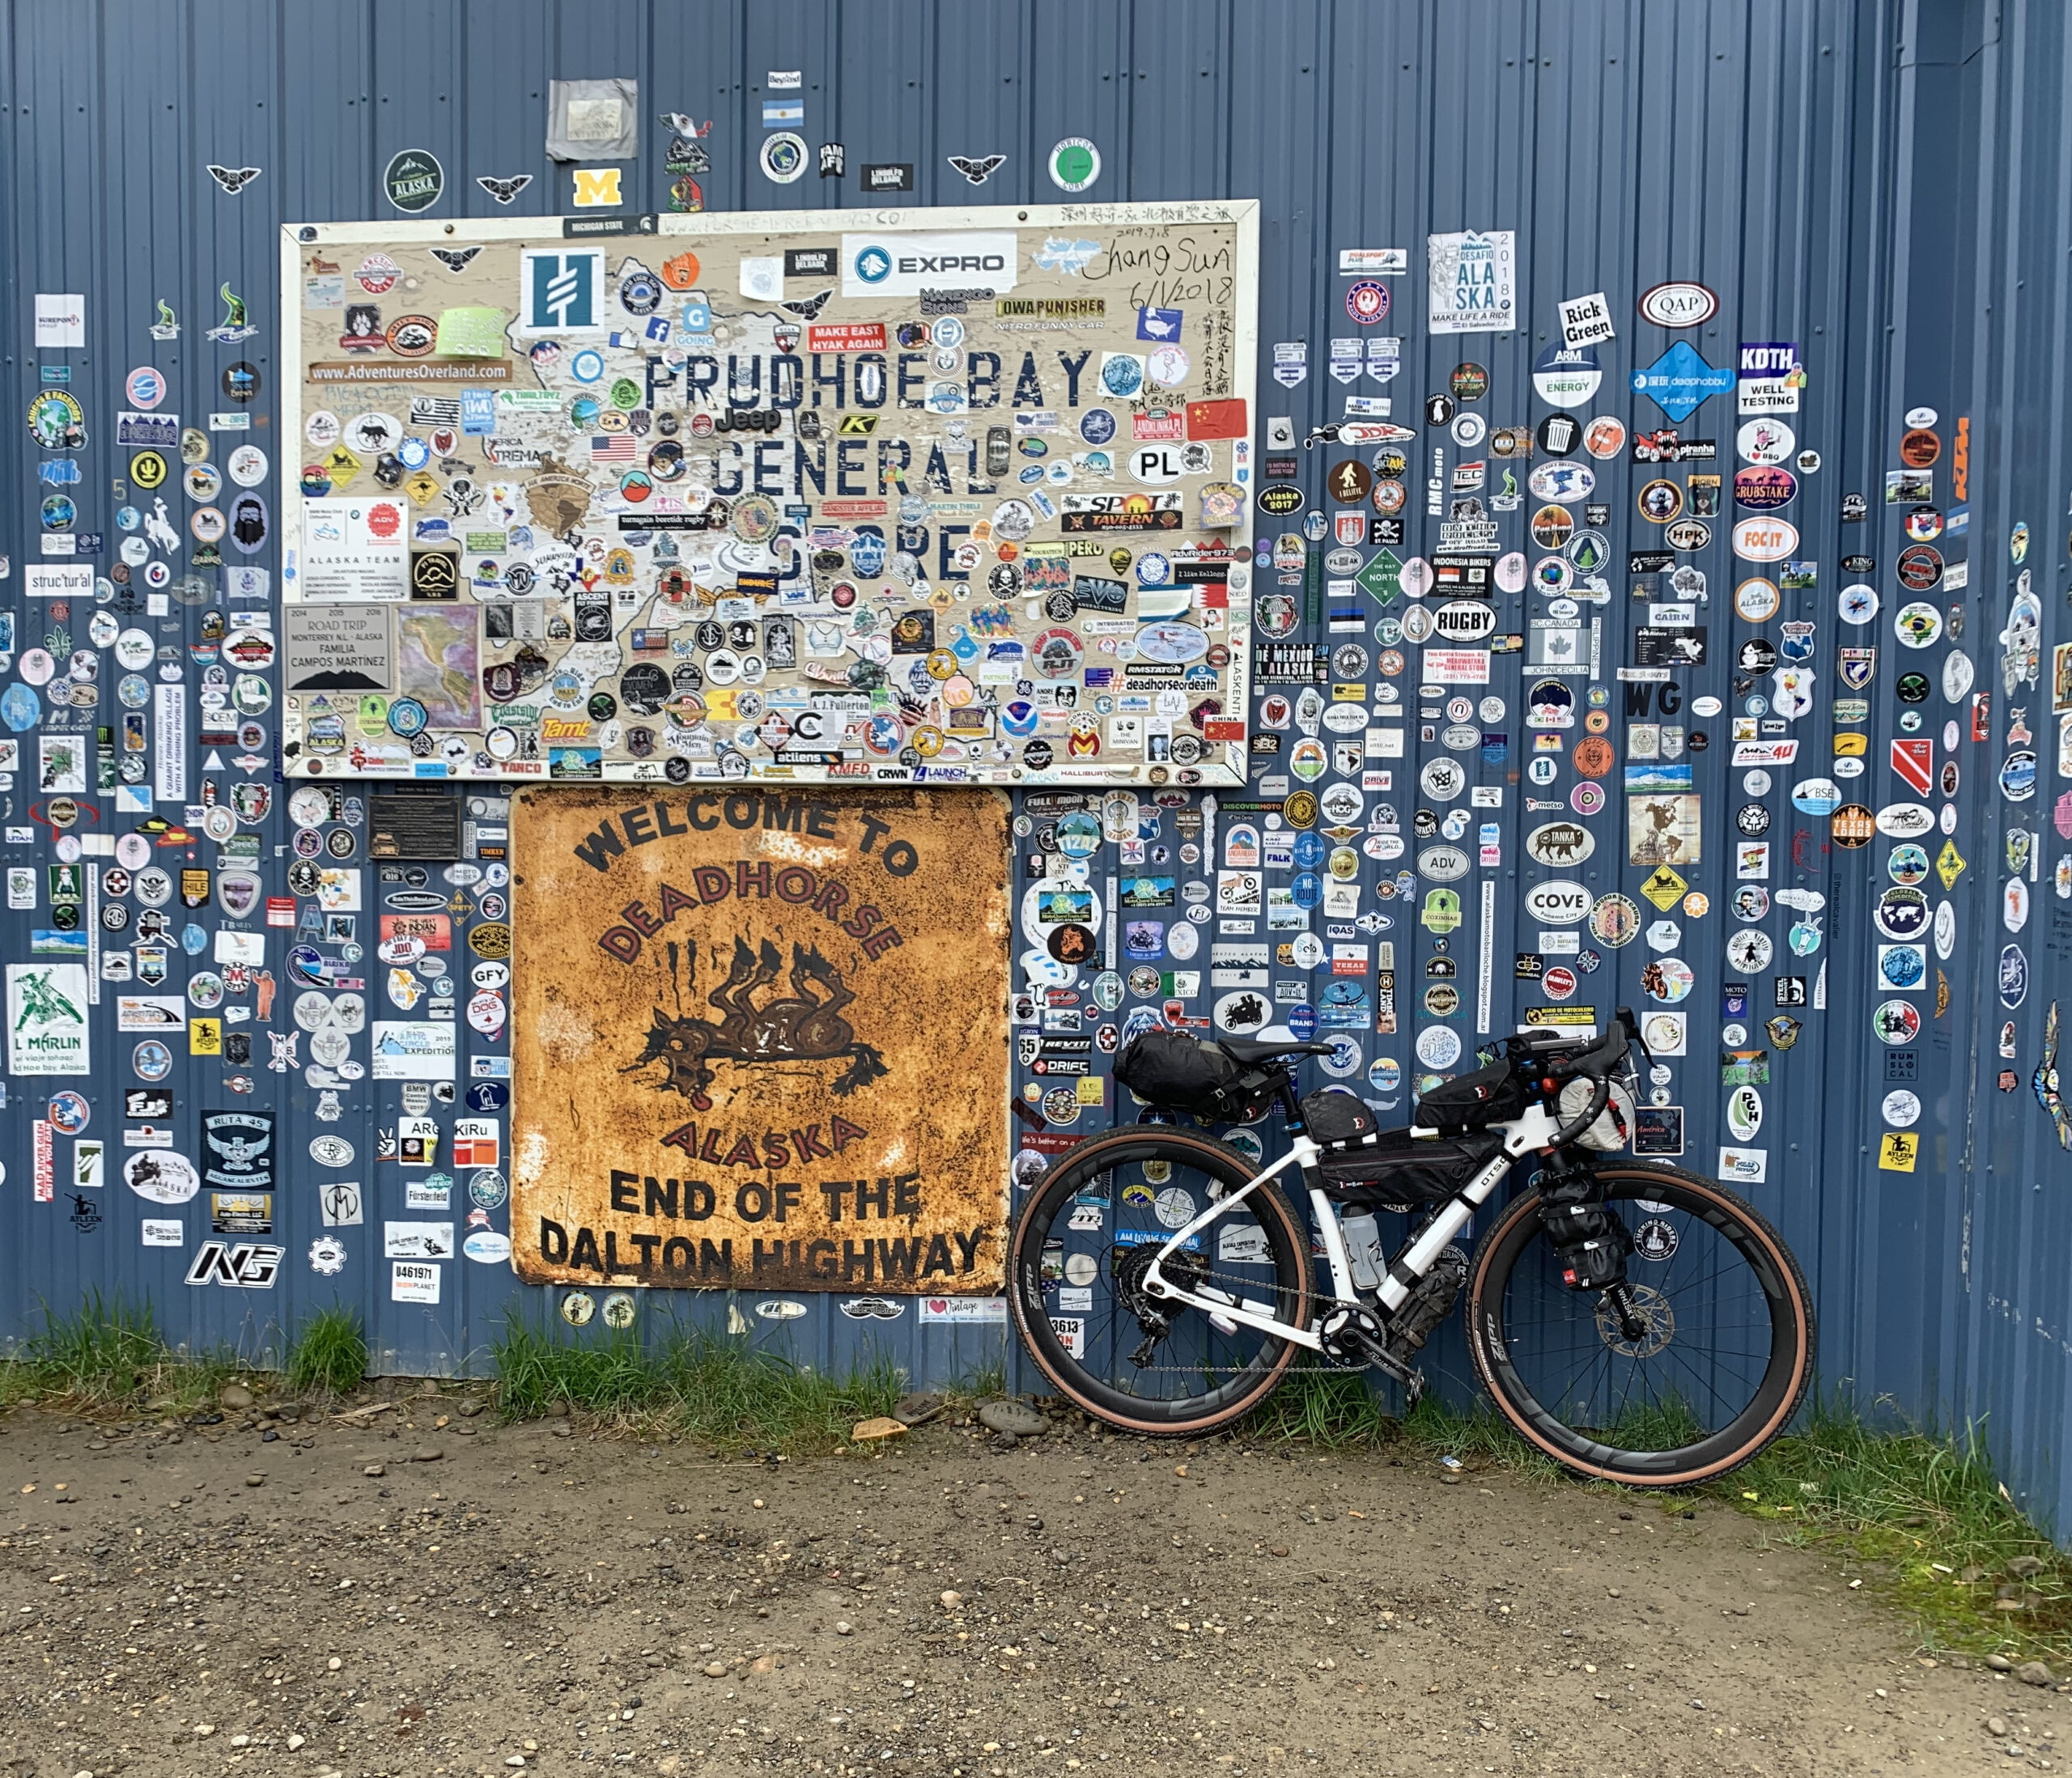 Rachel Heath rides her Otso Cycles Voytek bike on Alaska's Dalton Highway.